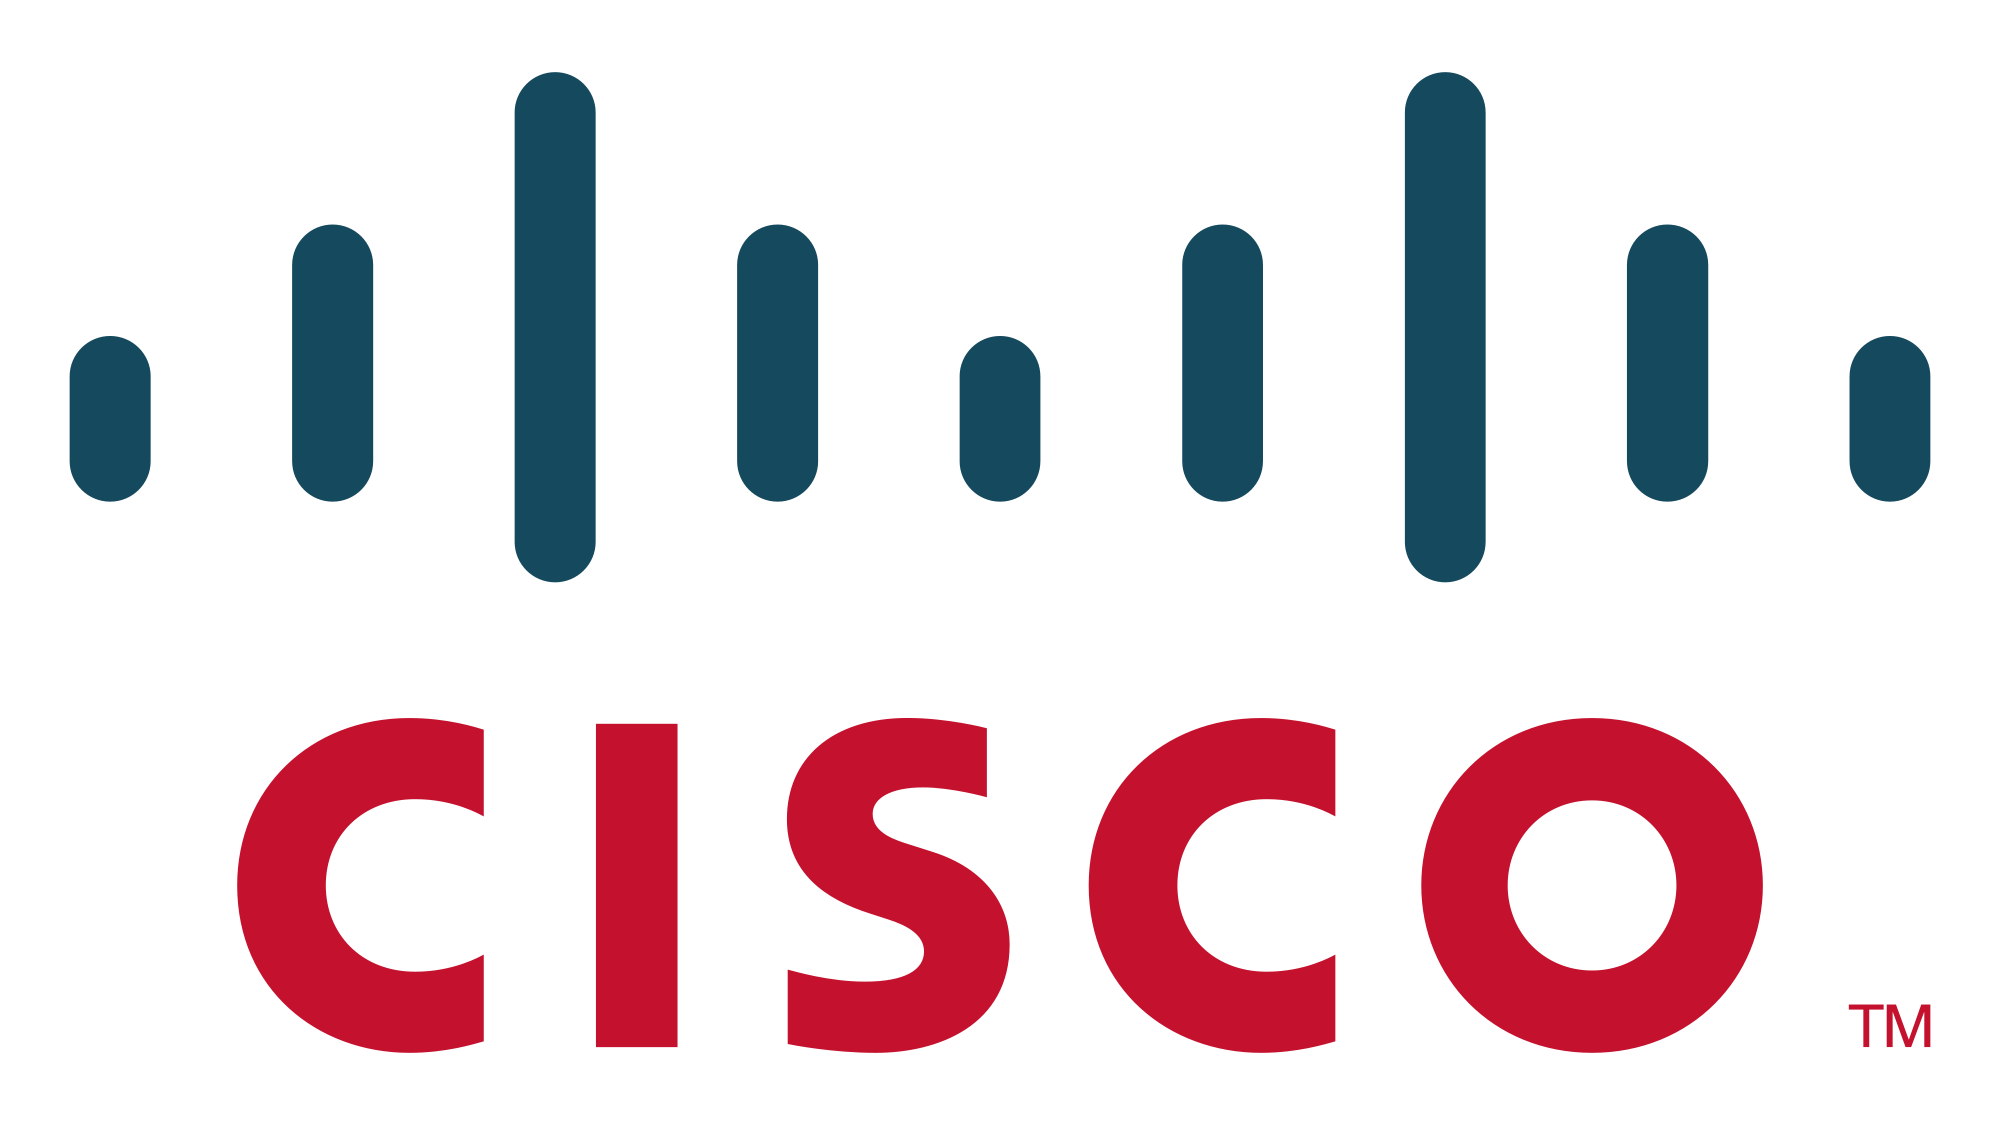 Cisco Organizational Chart 2018